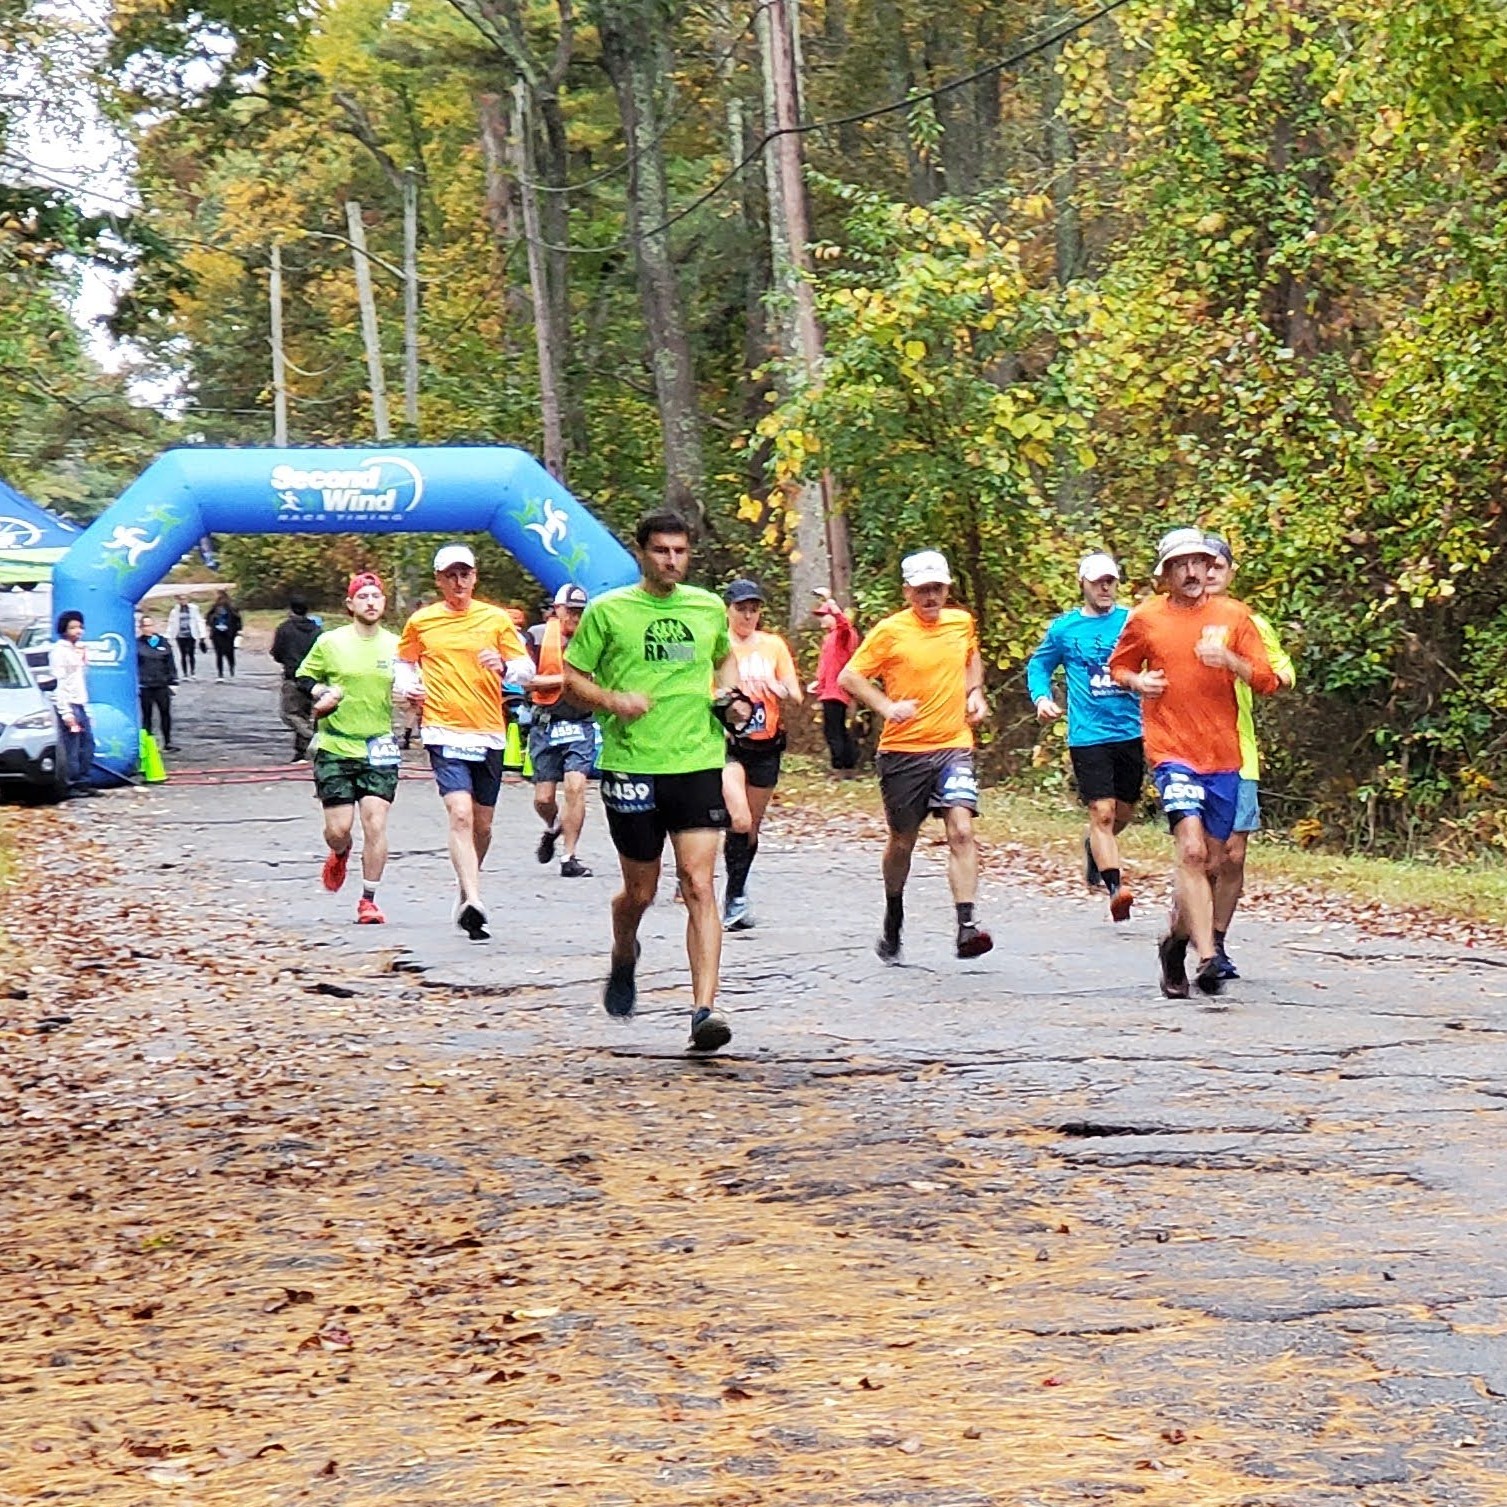 Race participants run through the Fall River Bioreserve